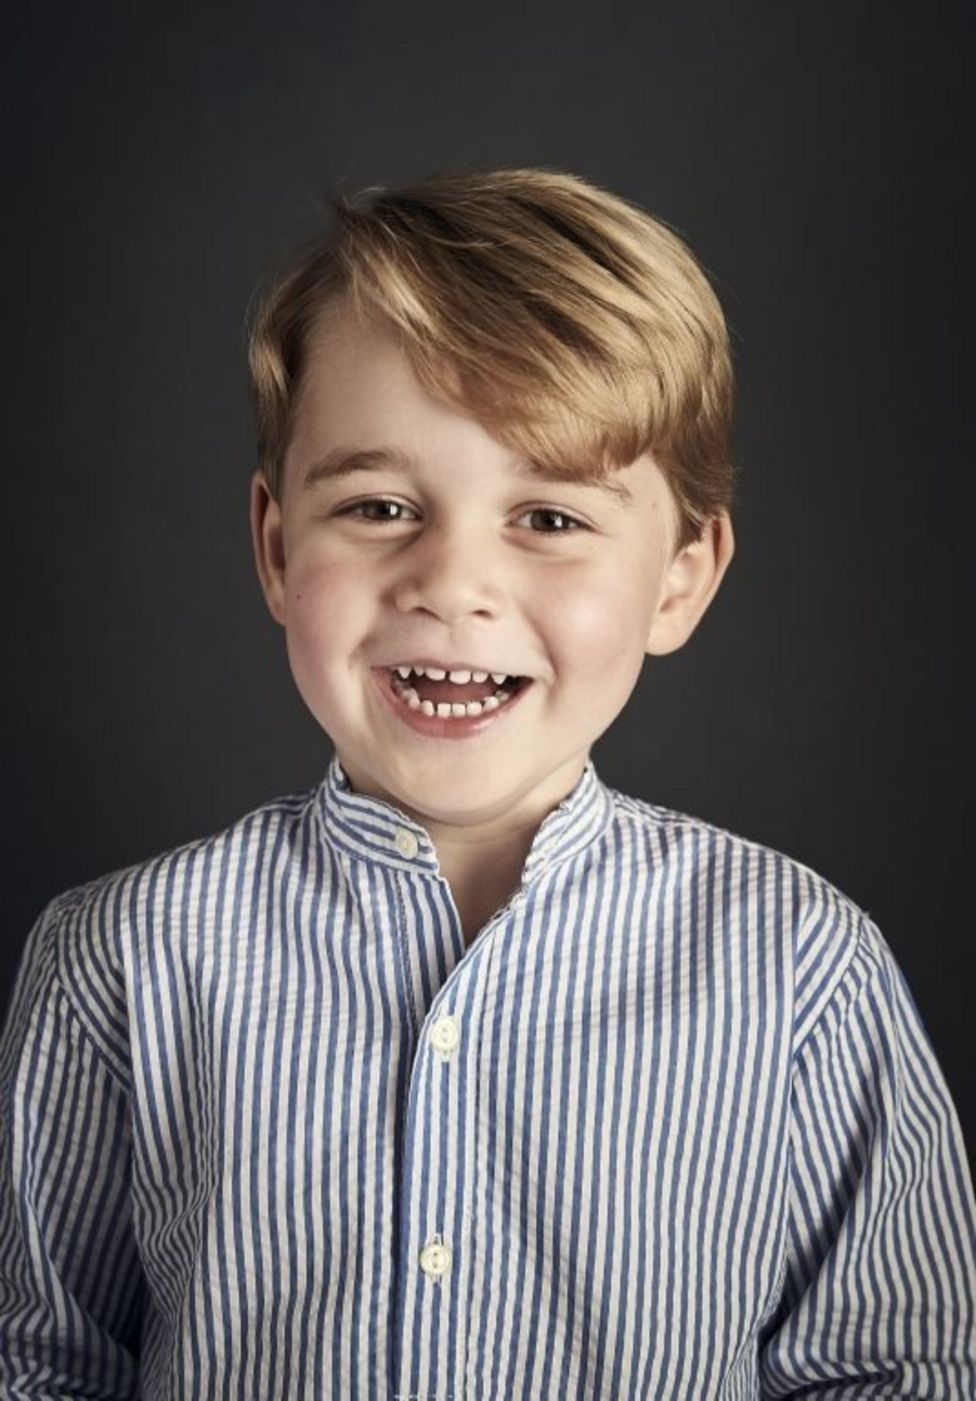 Prince George photo marks fourth birthday - BBC News